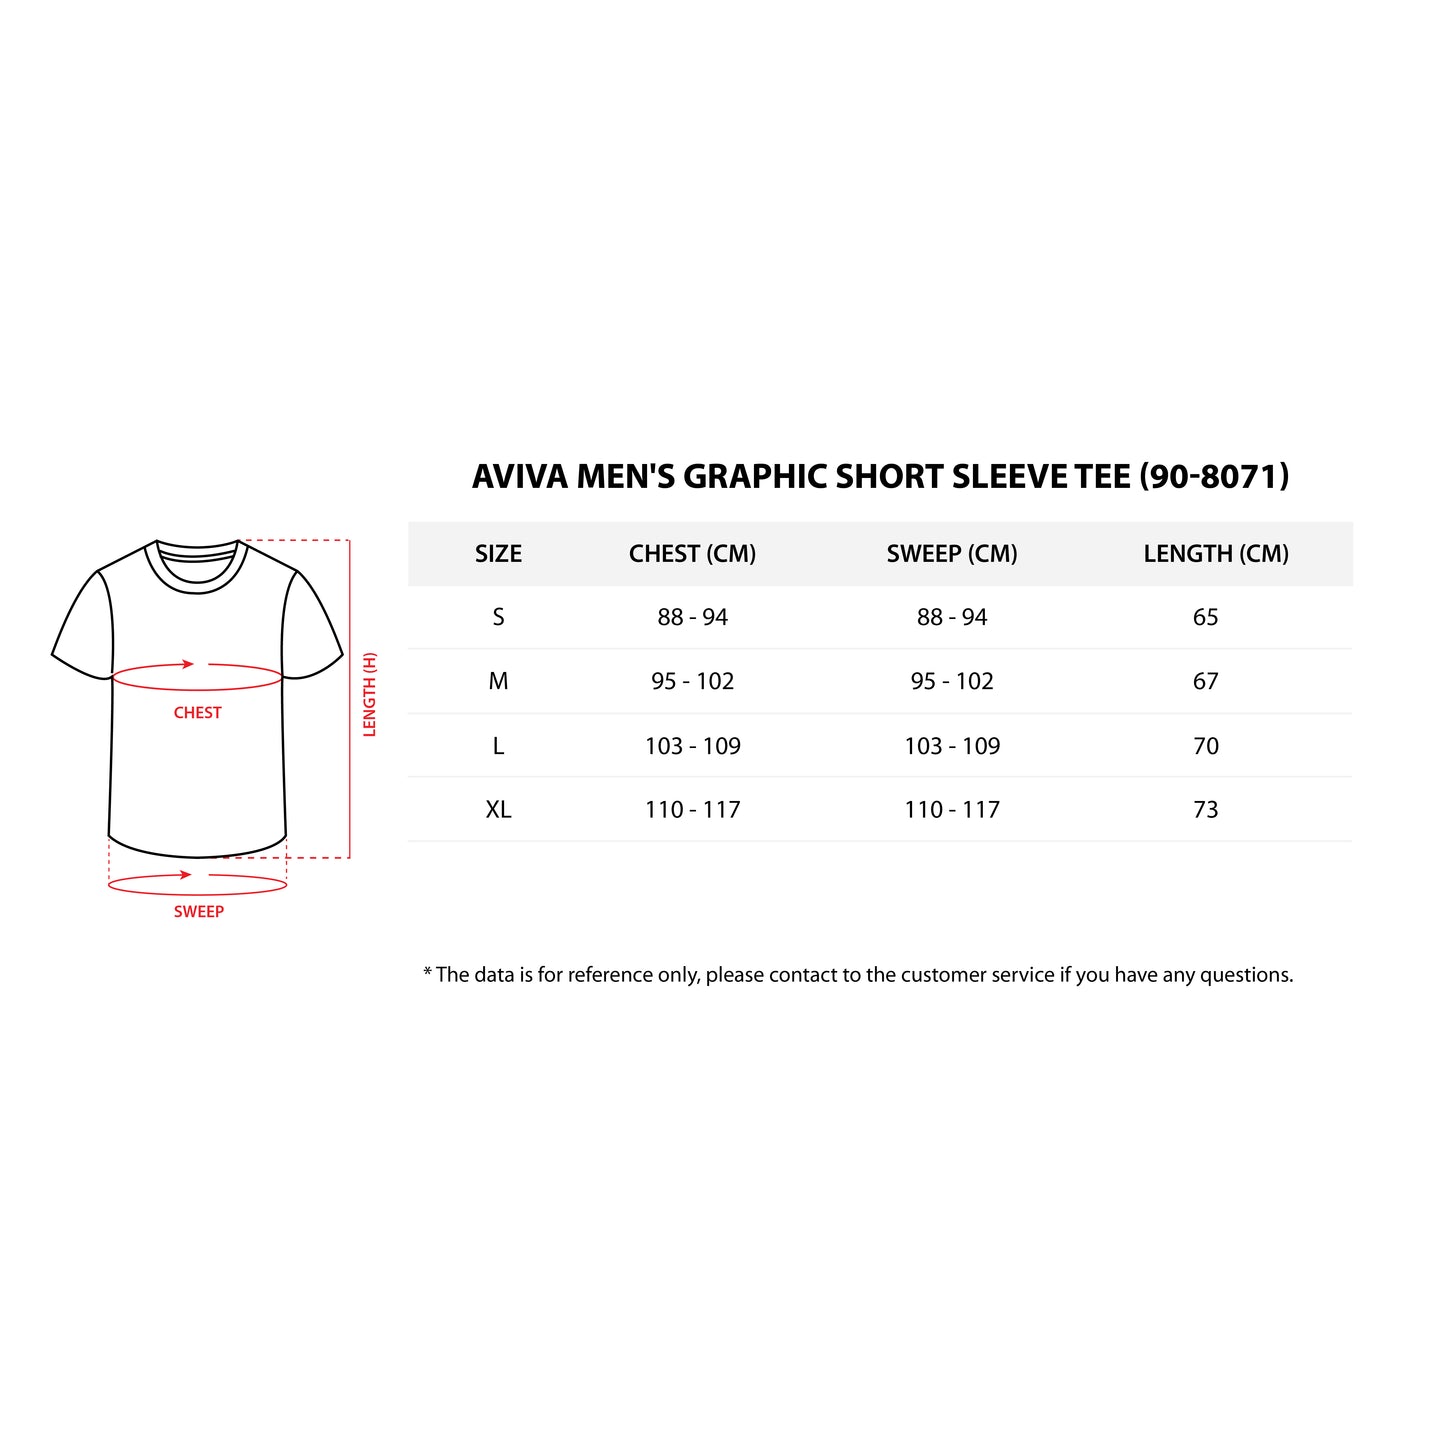 Aviva Men's Graphic Short Sleeve Tee (90-8071)